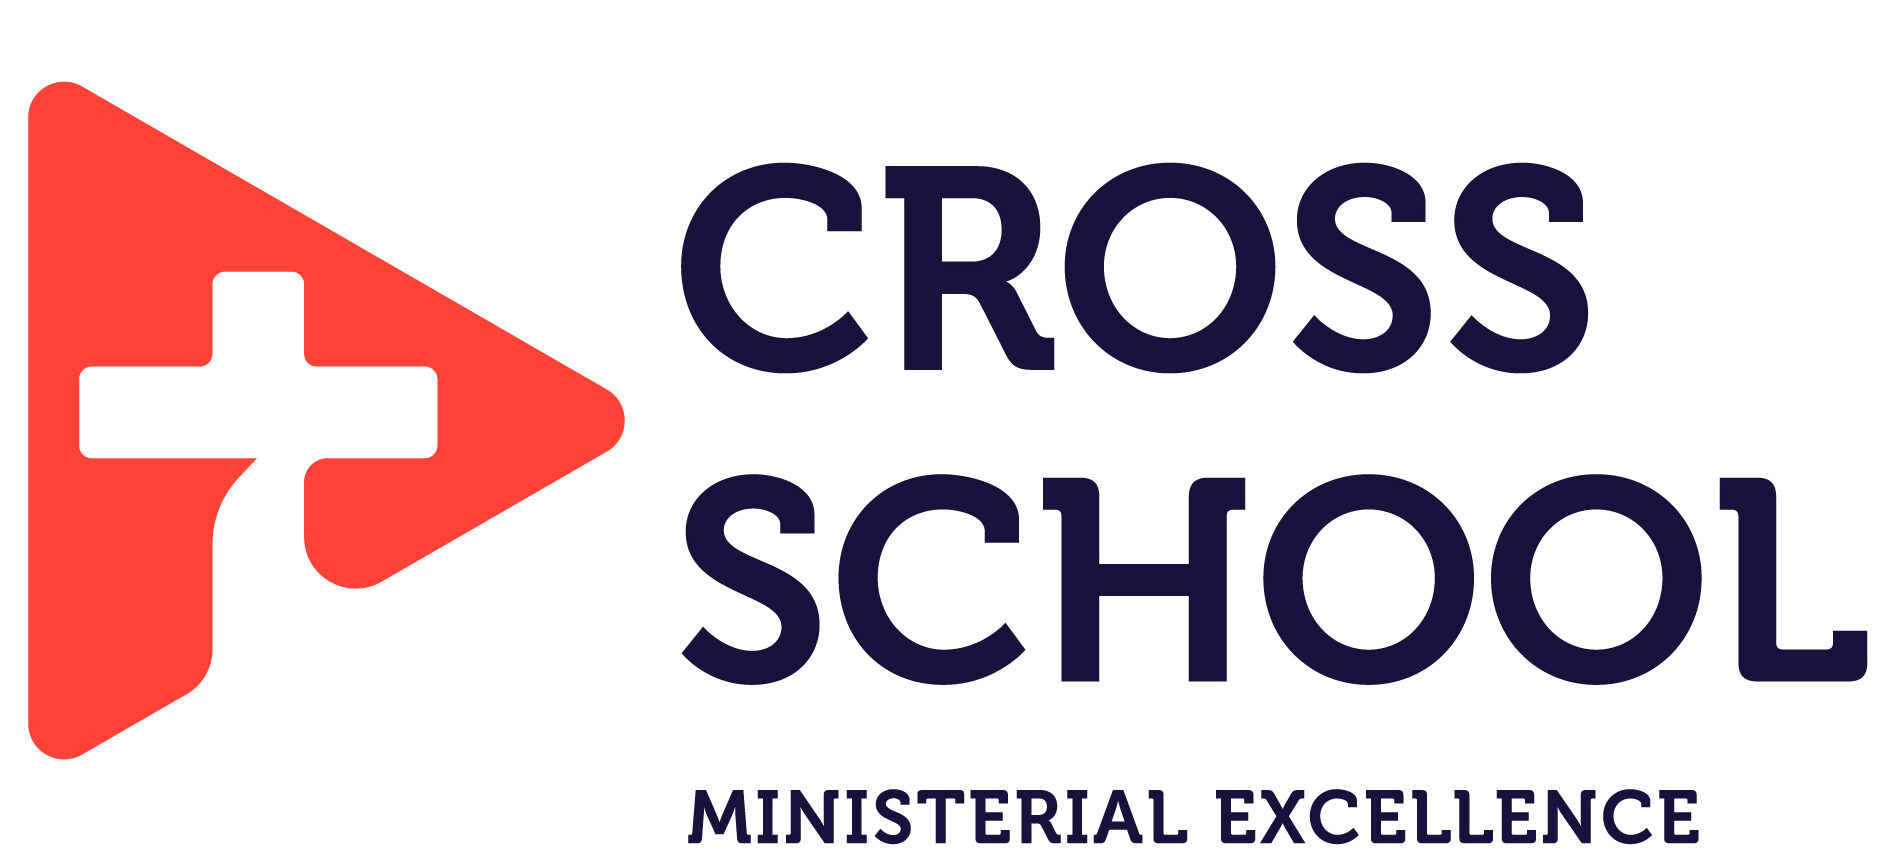 CROSS SCHOOL